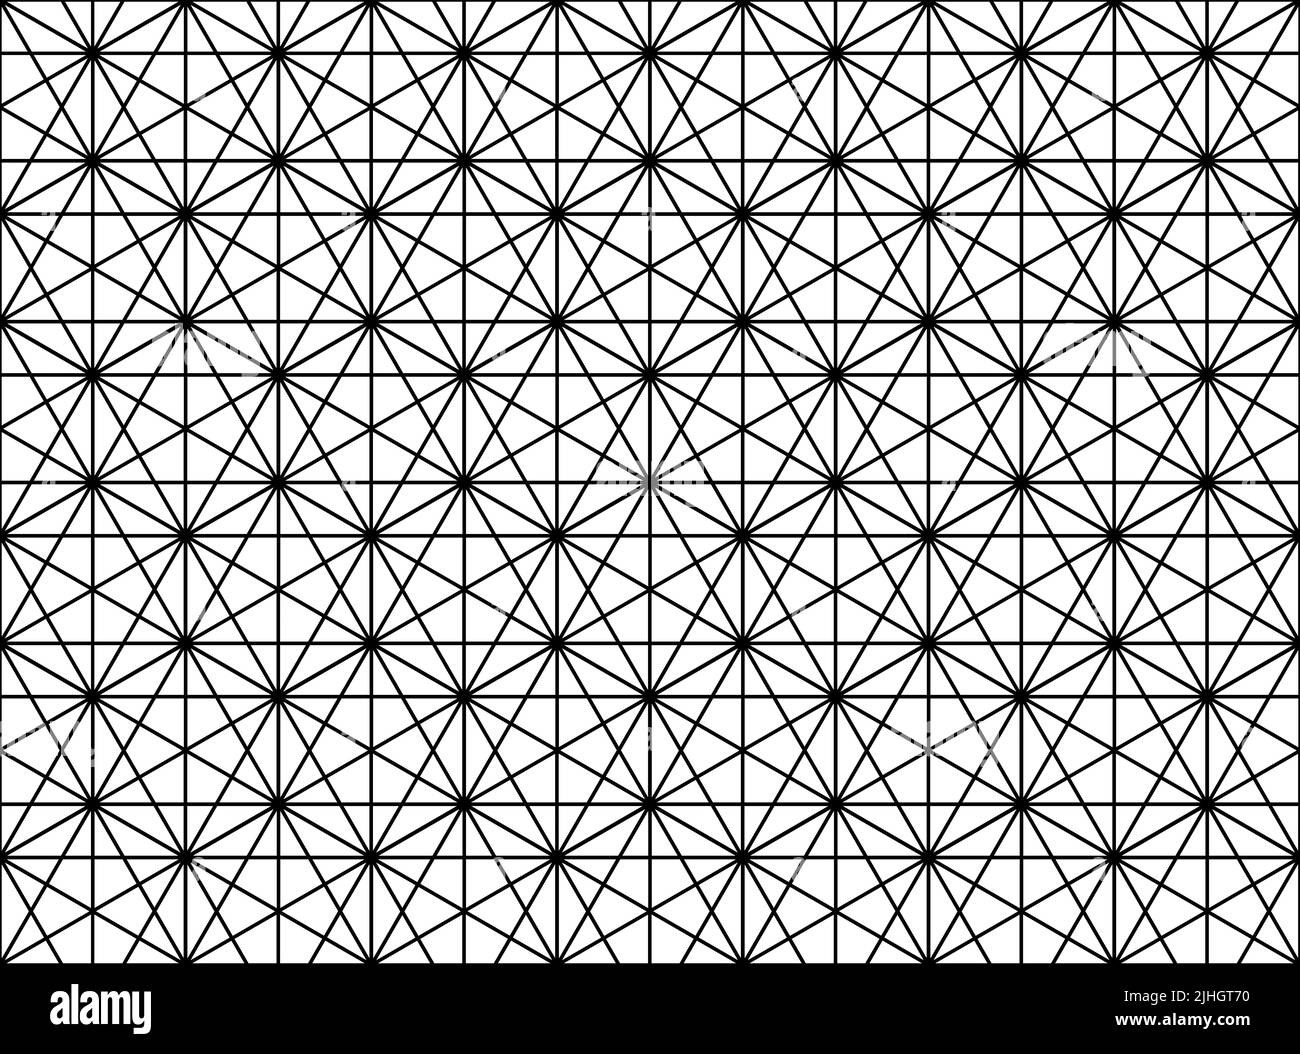 Seamless geometric pattern, black outline illustration over white background, abstract digital illustration Stock Photo